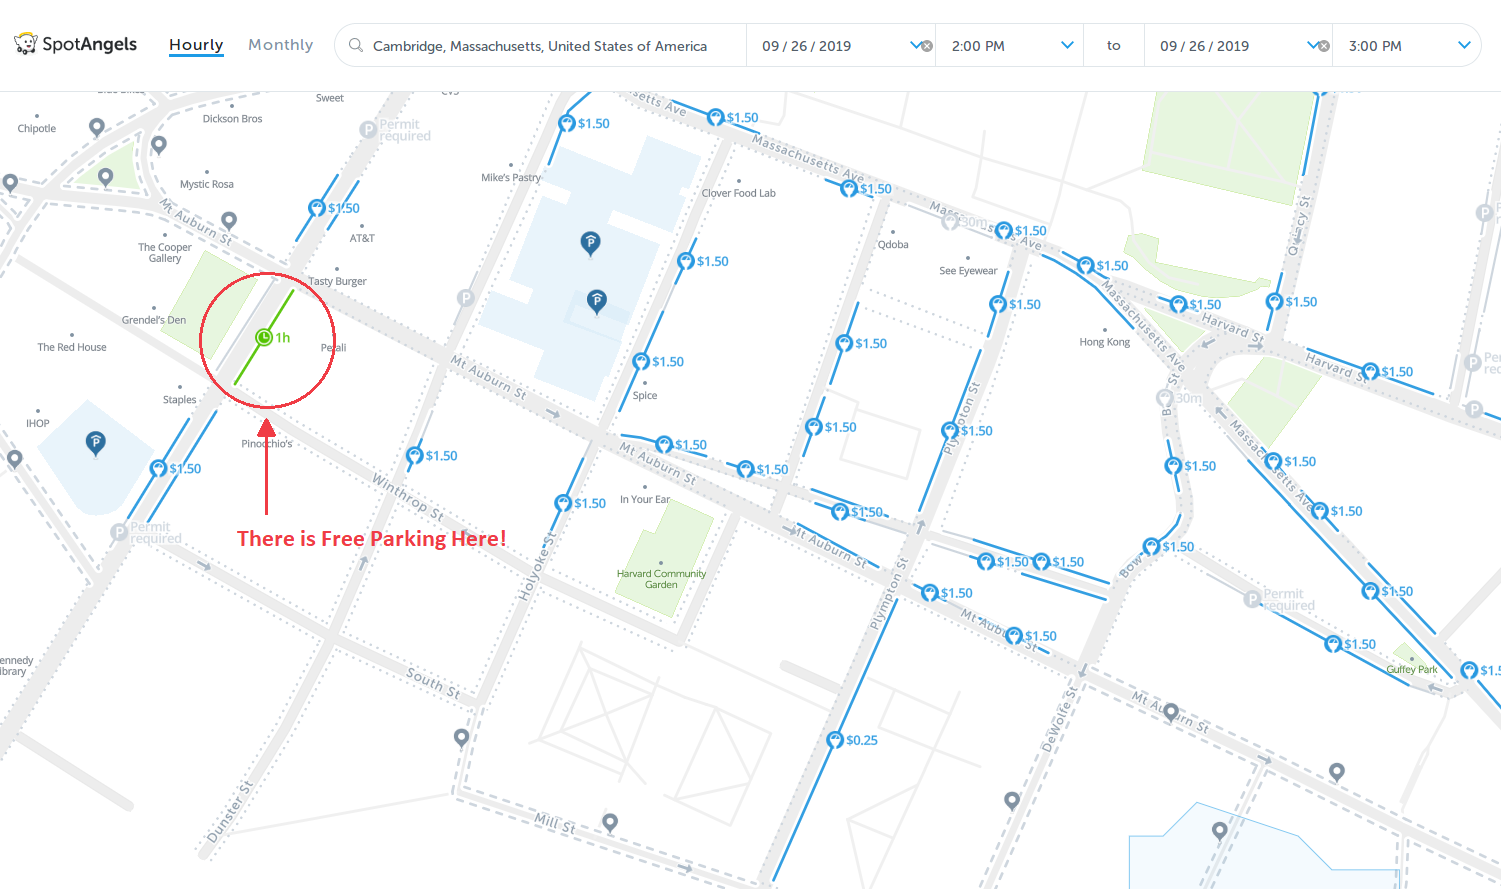 map of street parking in Cambridge - SpotAngels